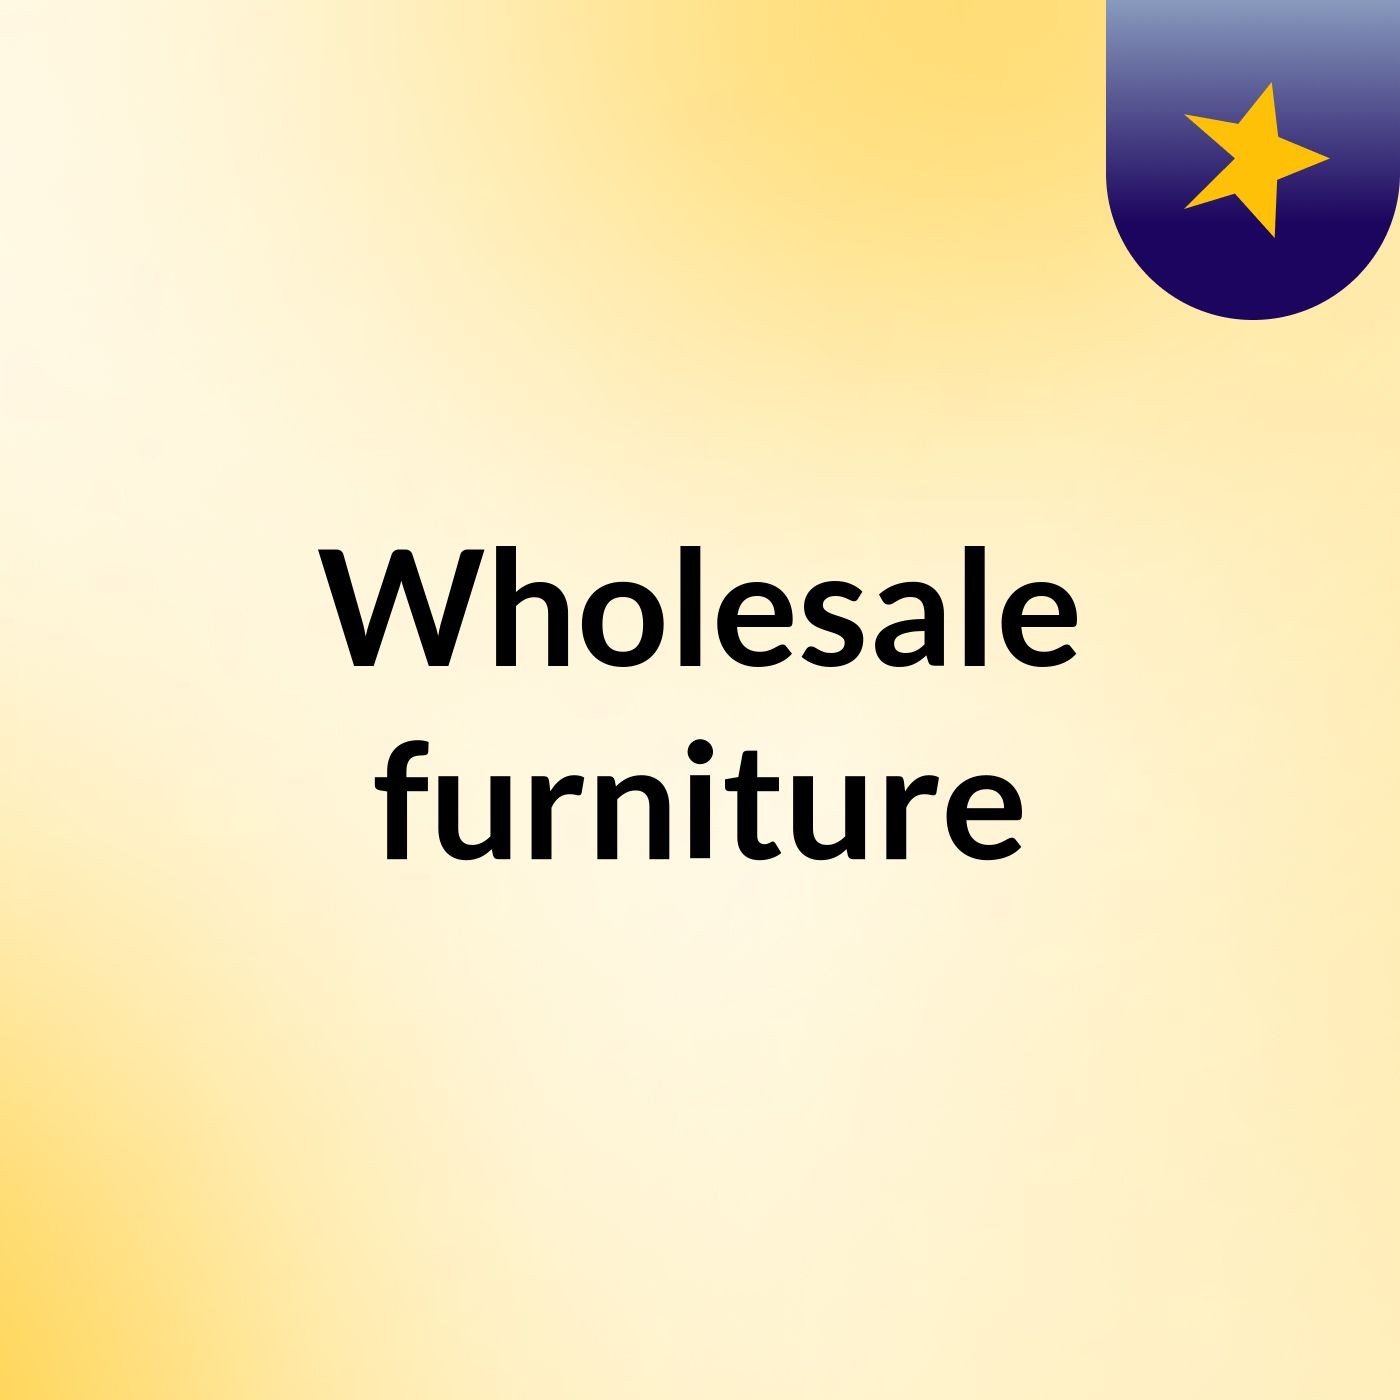 Wholesale furniture